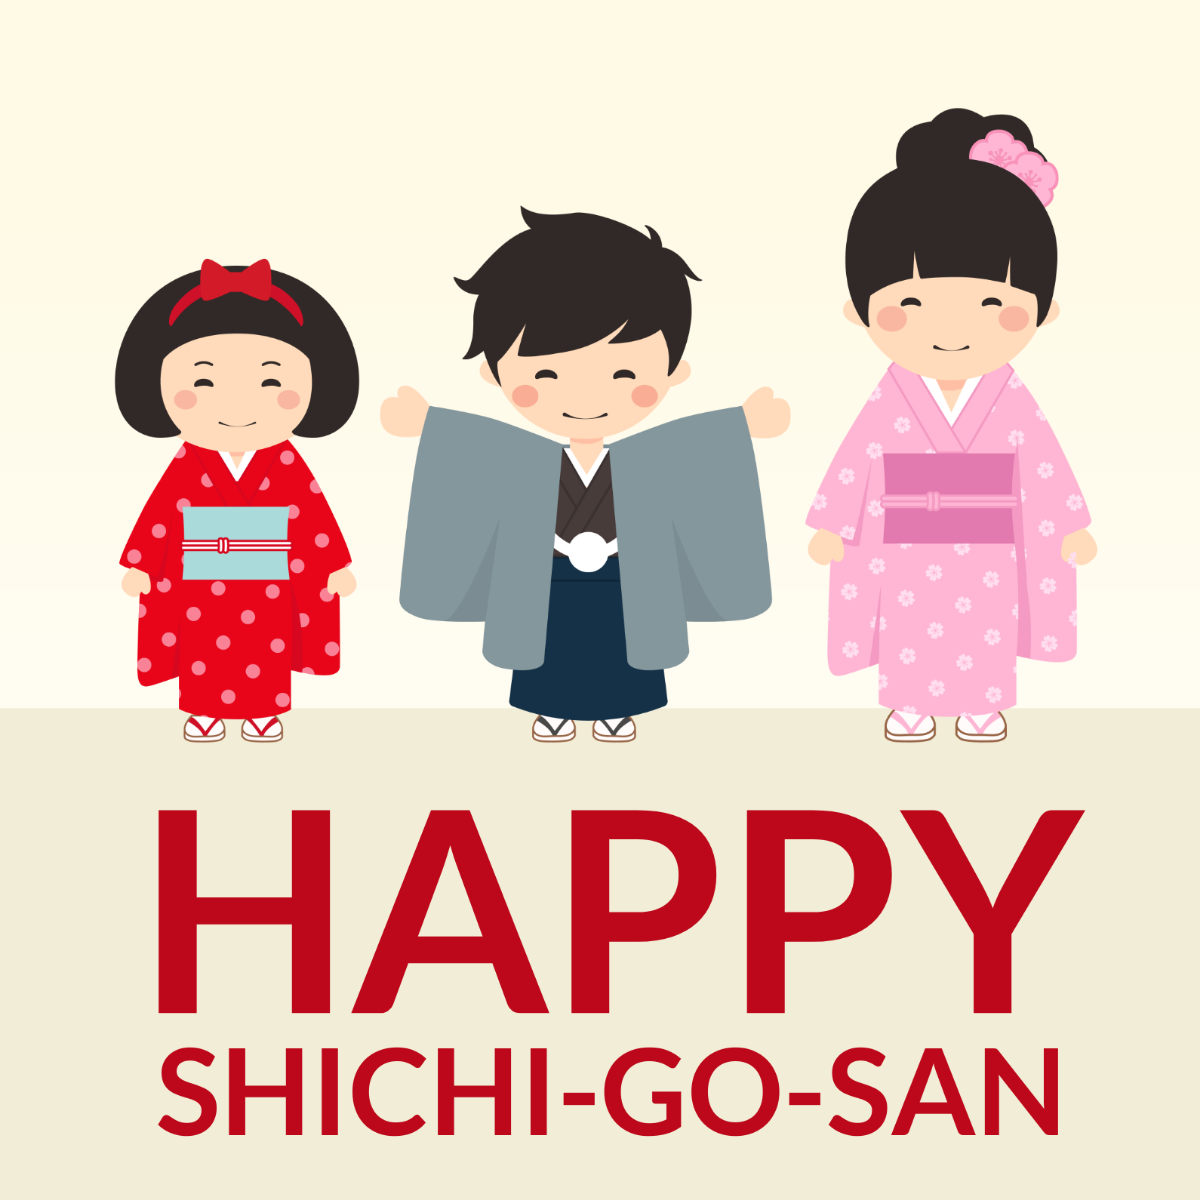 Free Shichi-Go-San LinkedIn Post Template